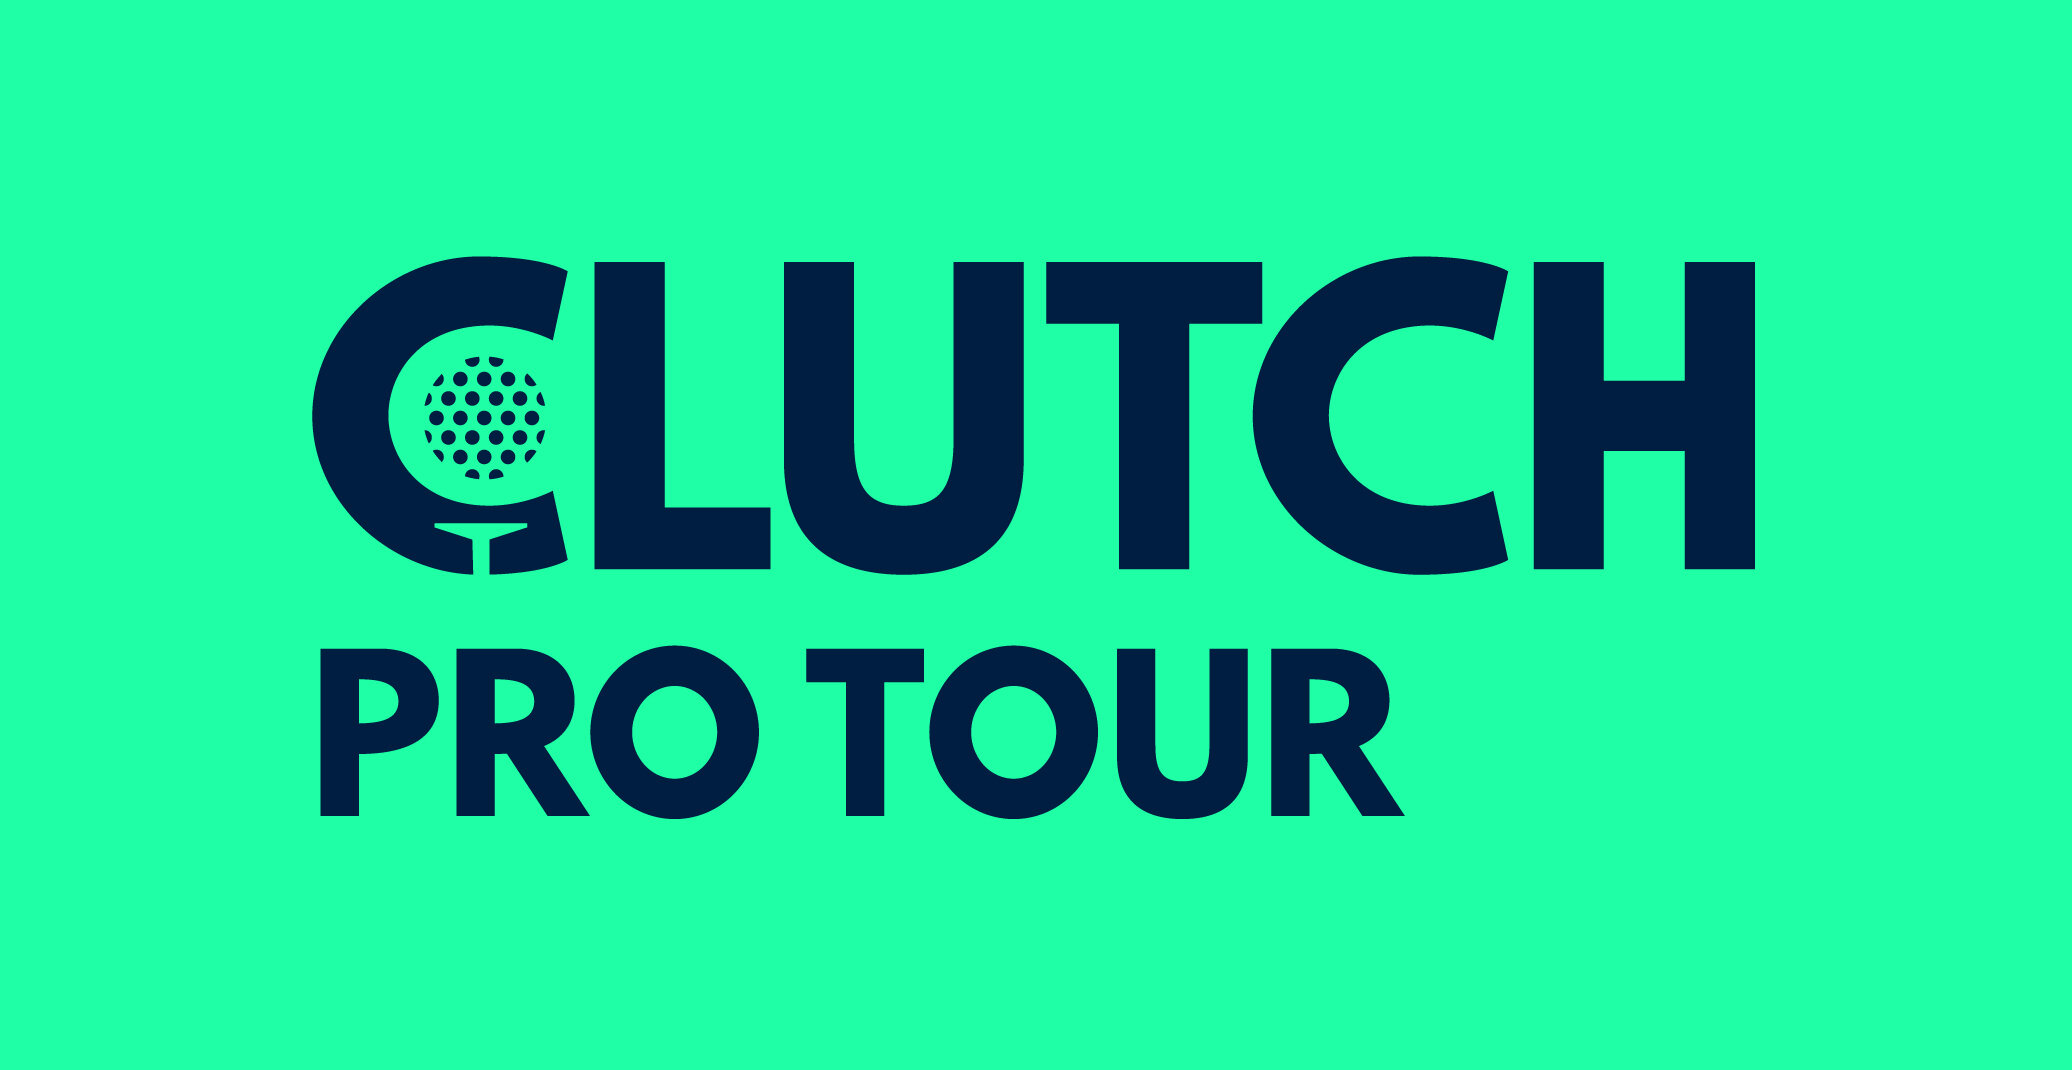 clutch tour membership